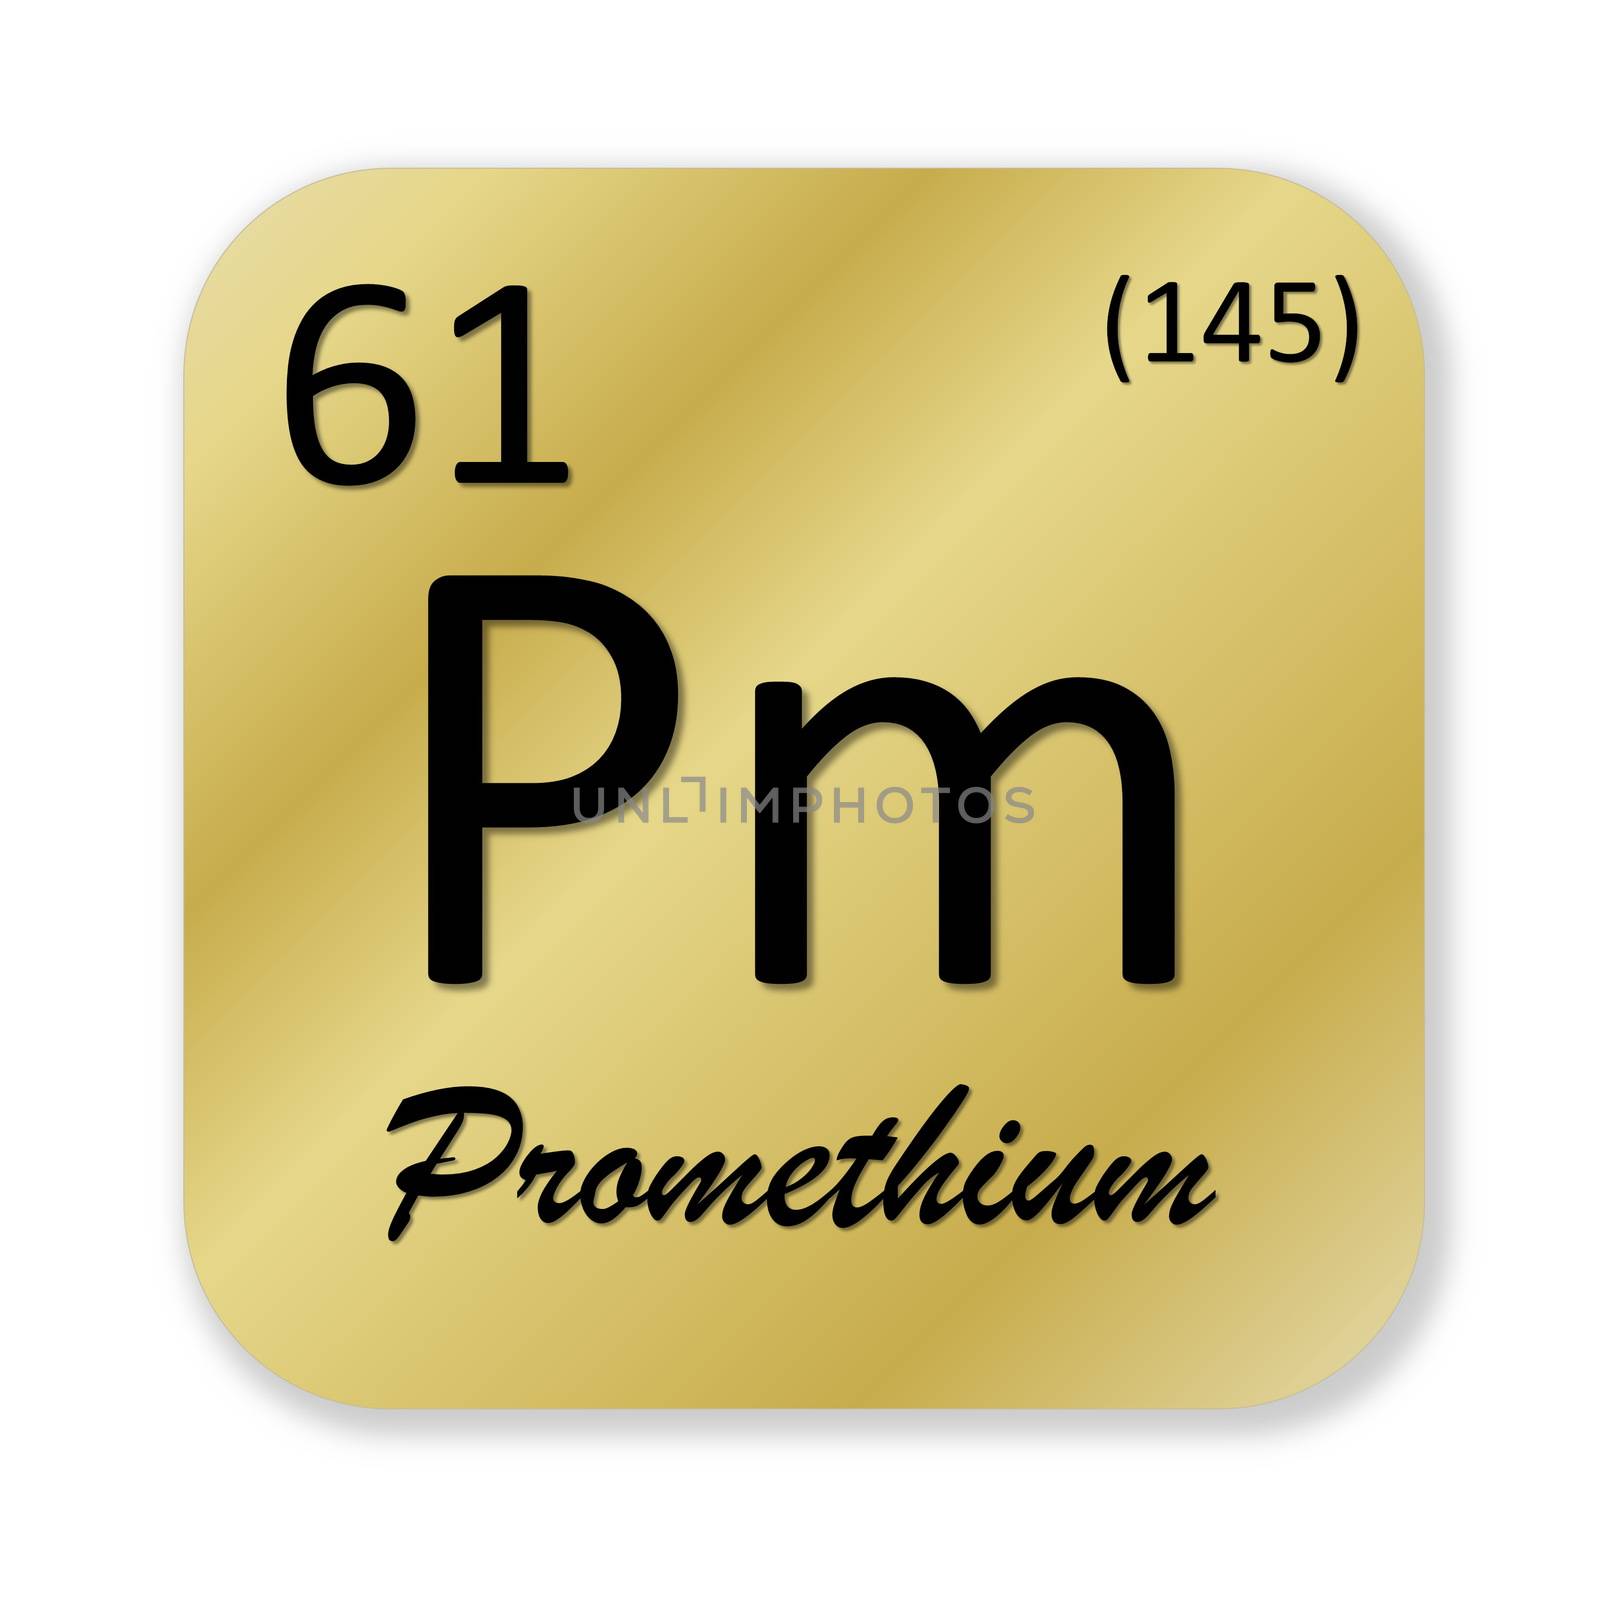 Black promethium element into golden square shape isolated in white background